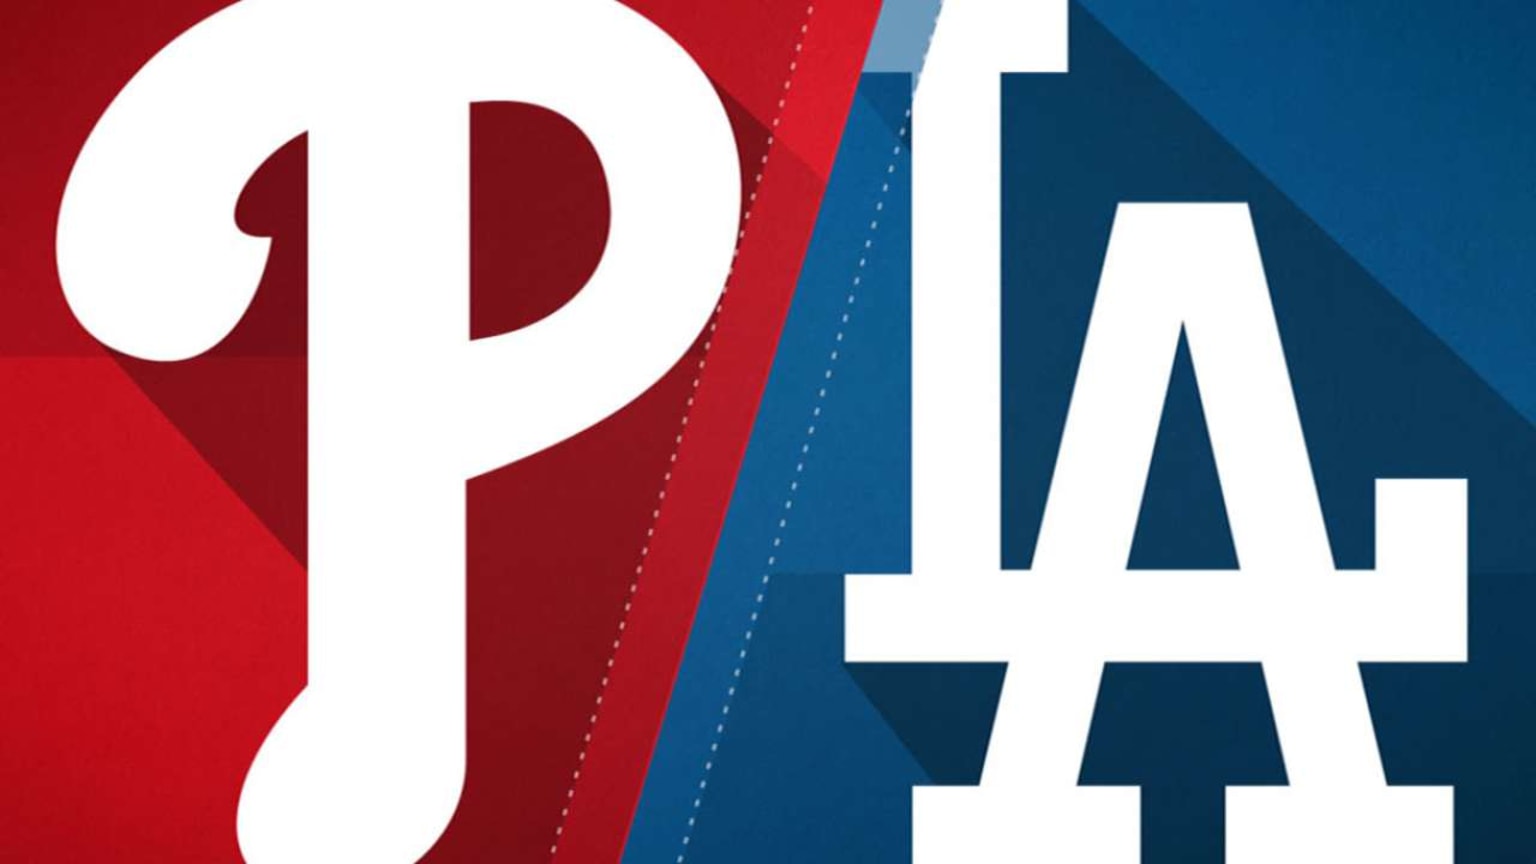 Braves announcers rip Dodgers for 'unprofessional' BP attire